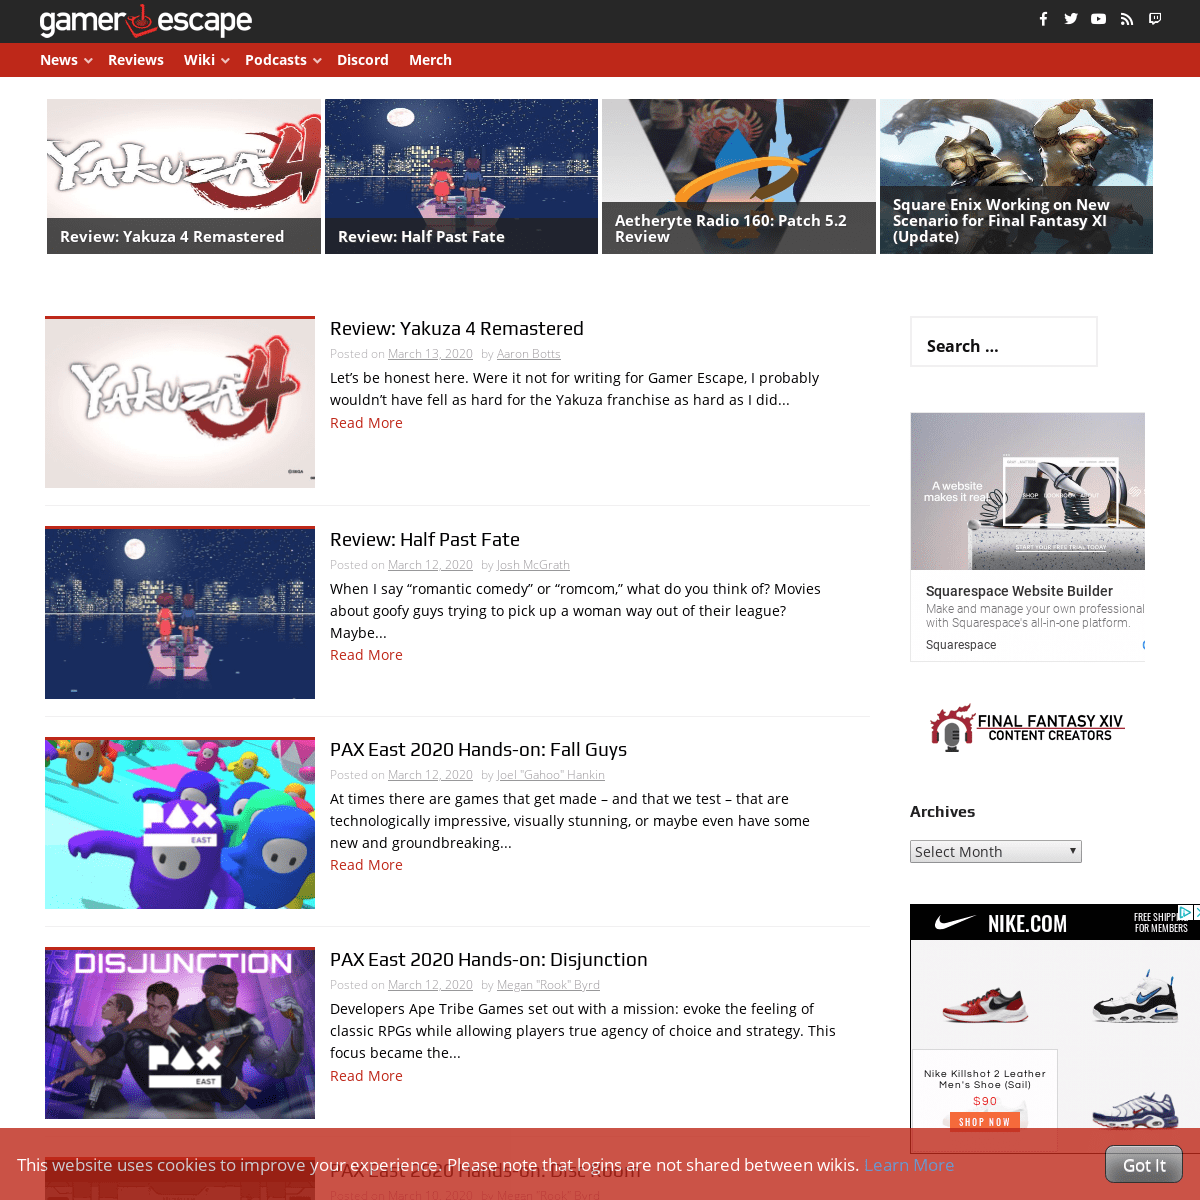 A complete backup of gamerescape.com